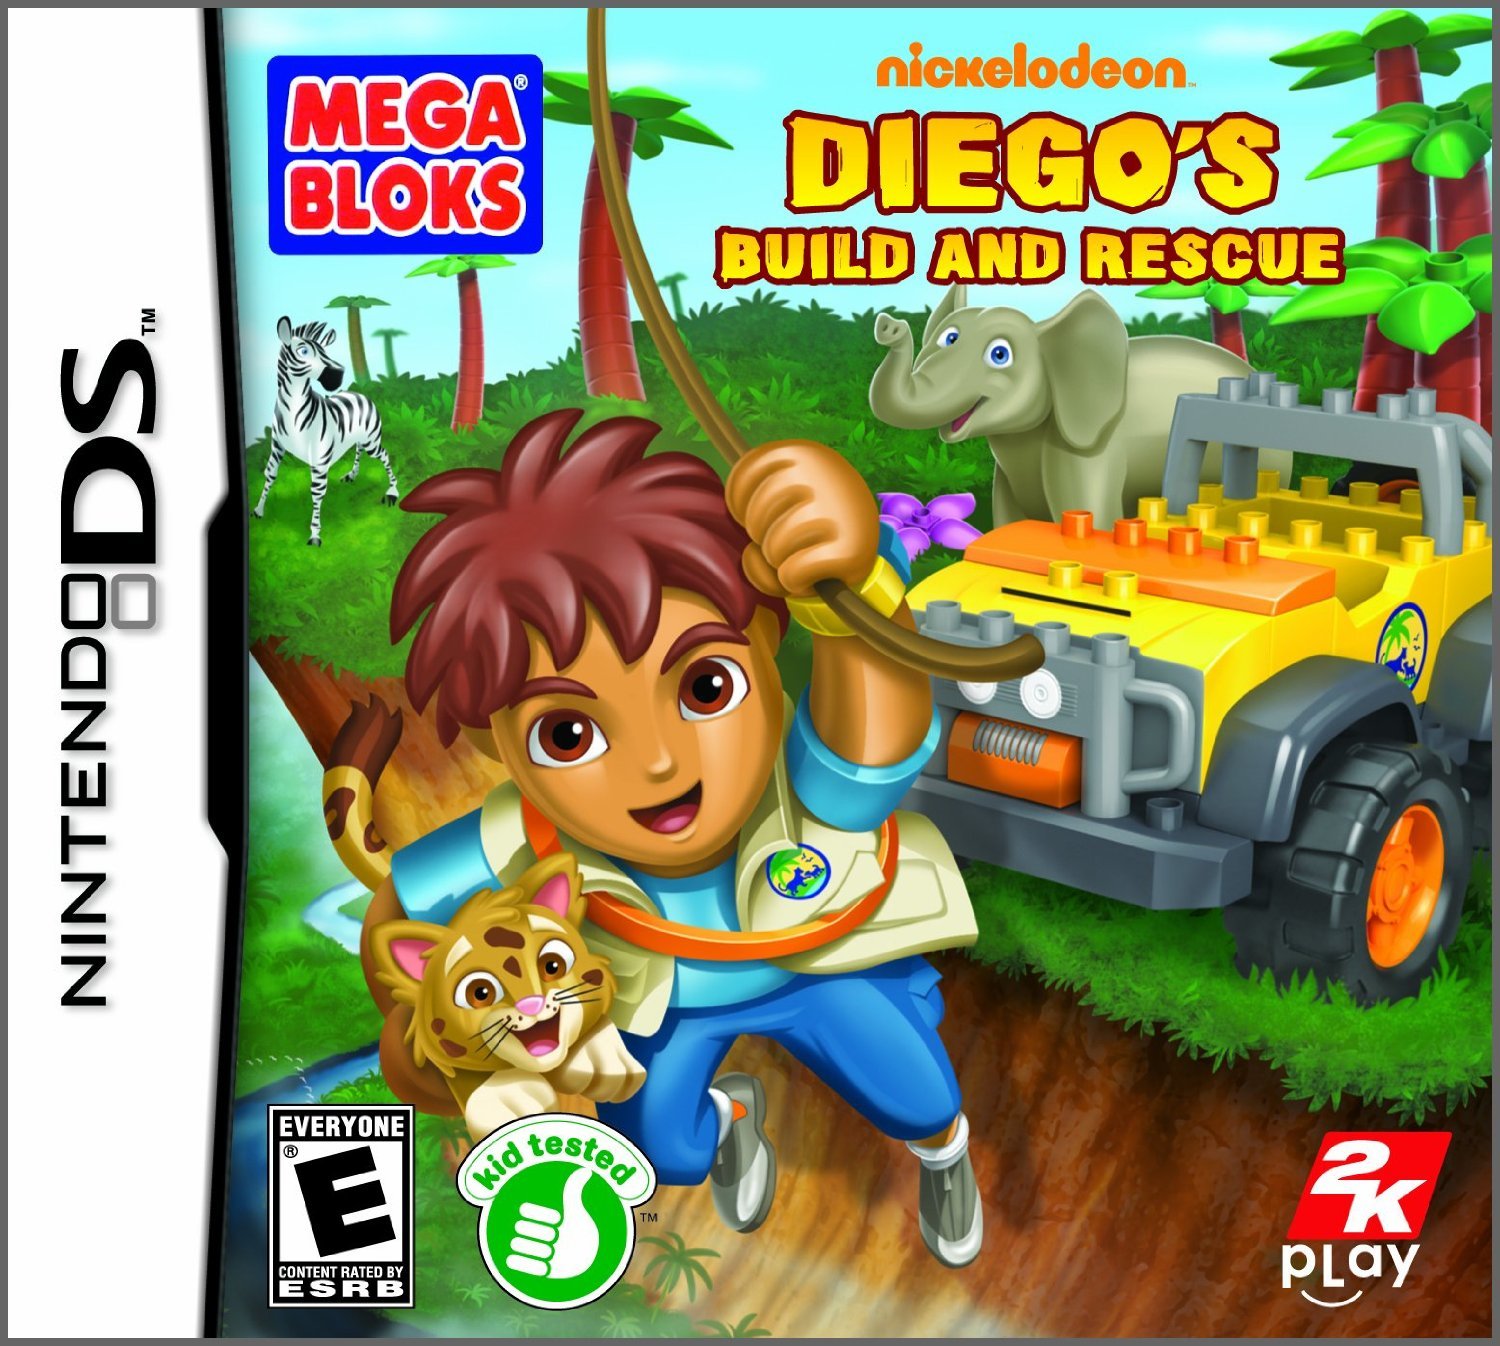 Mega Bloks Diego's Build and Rescue - Nintendo DS